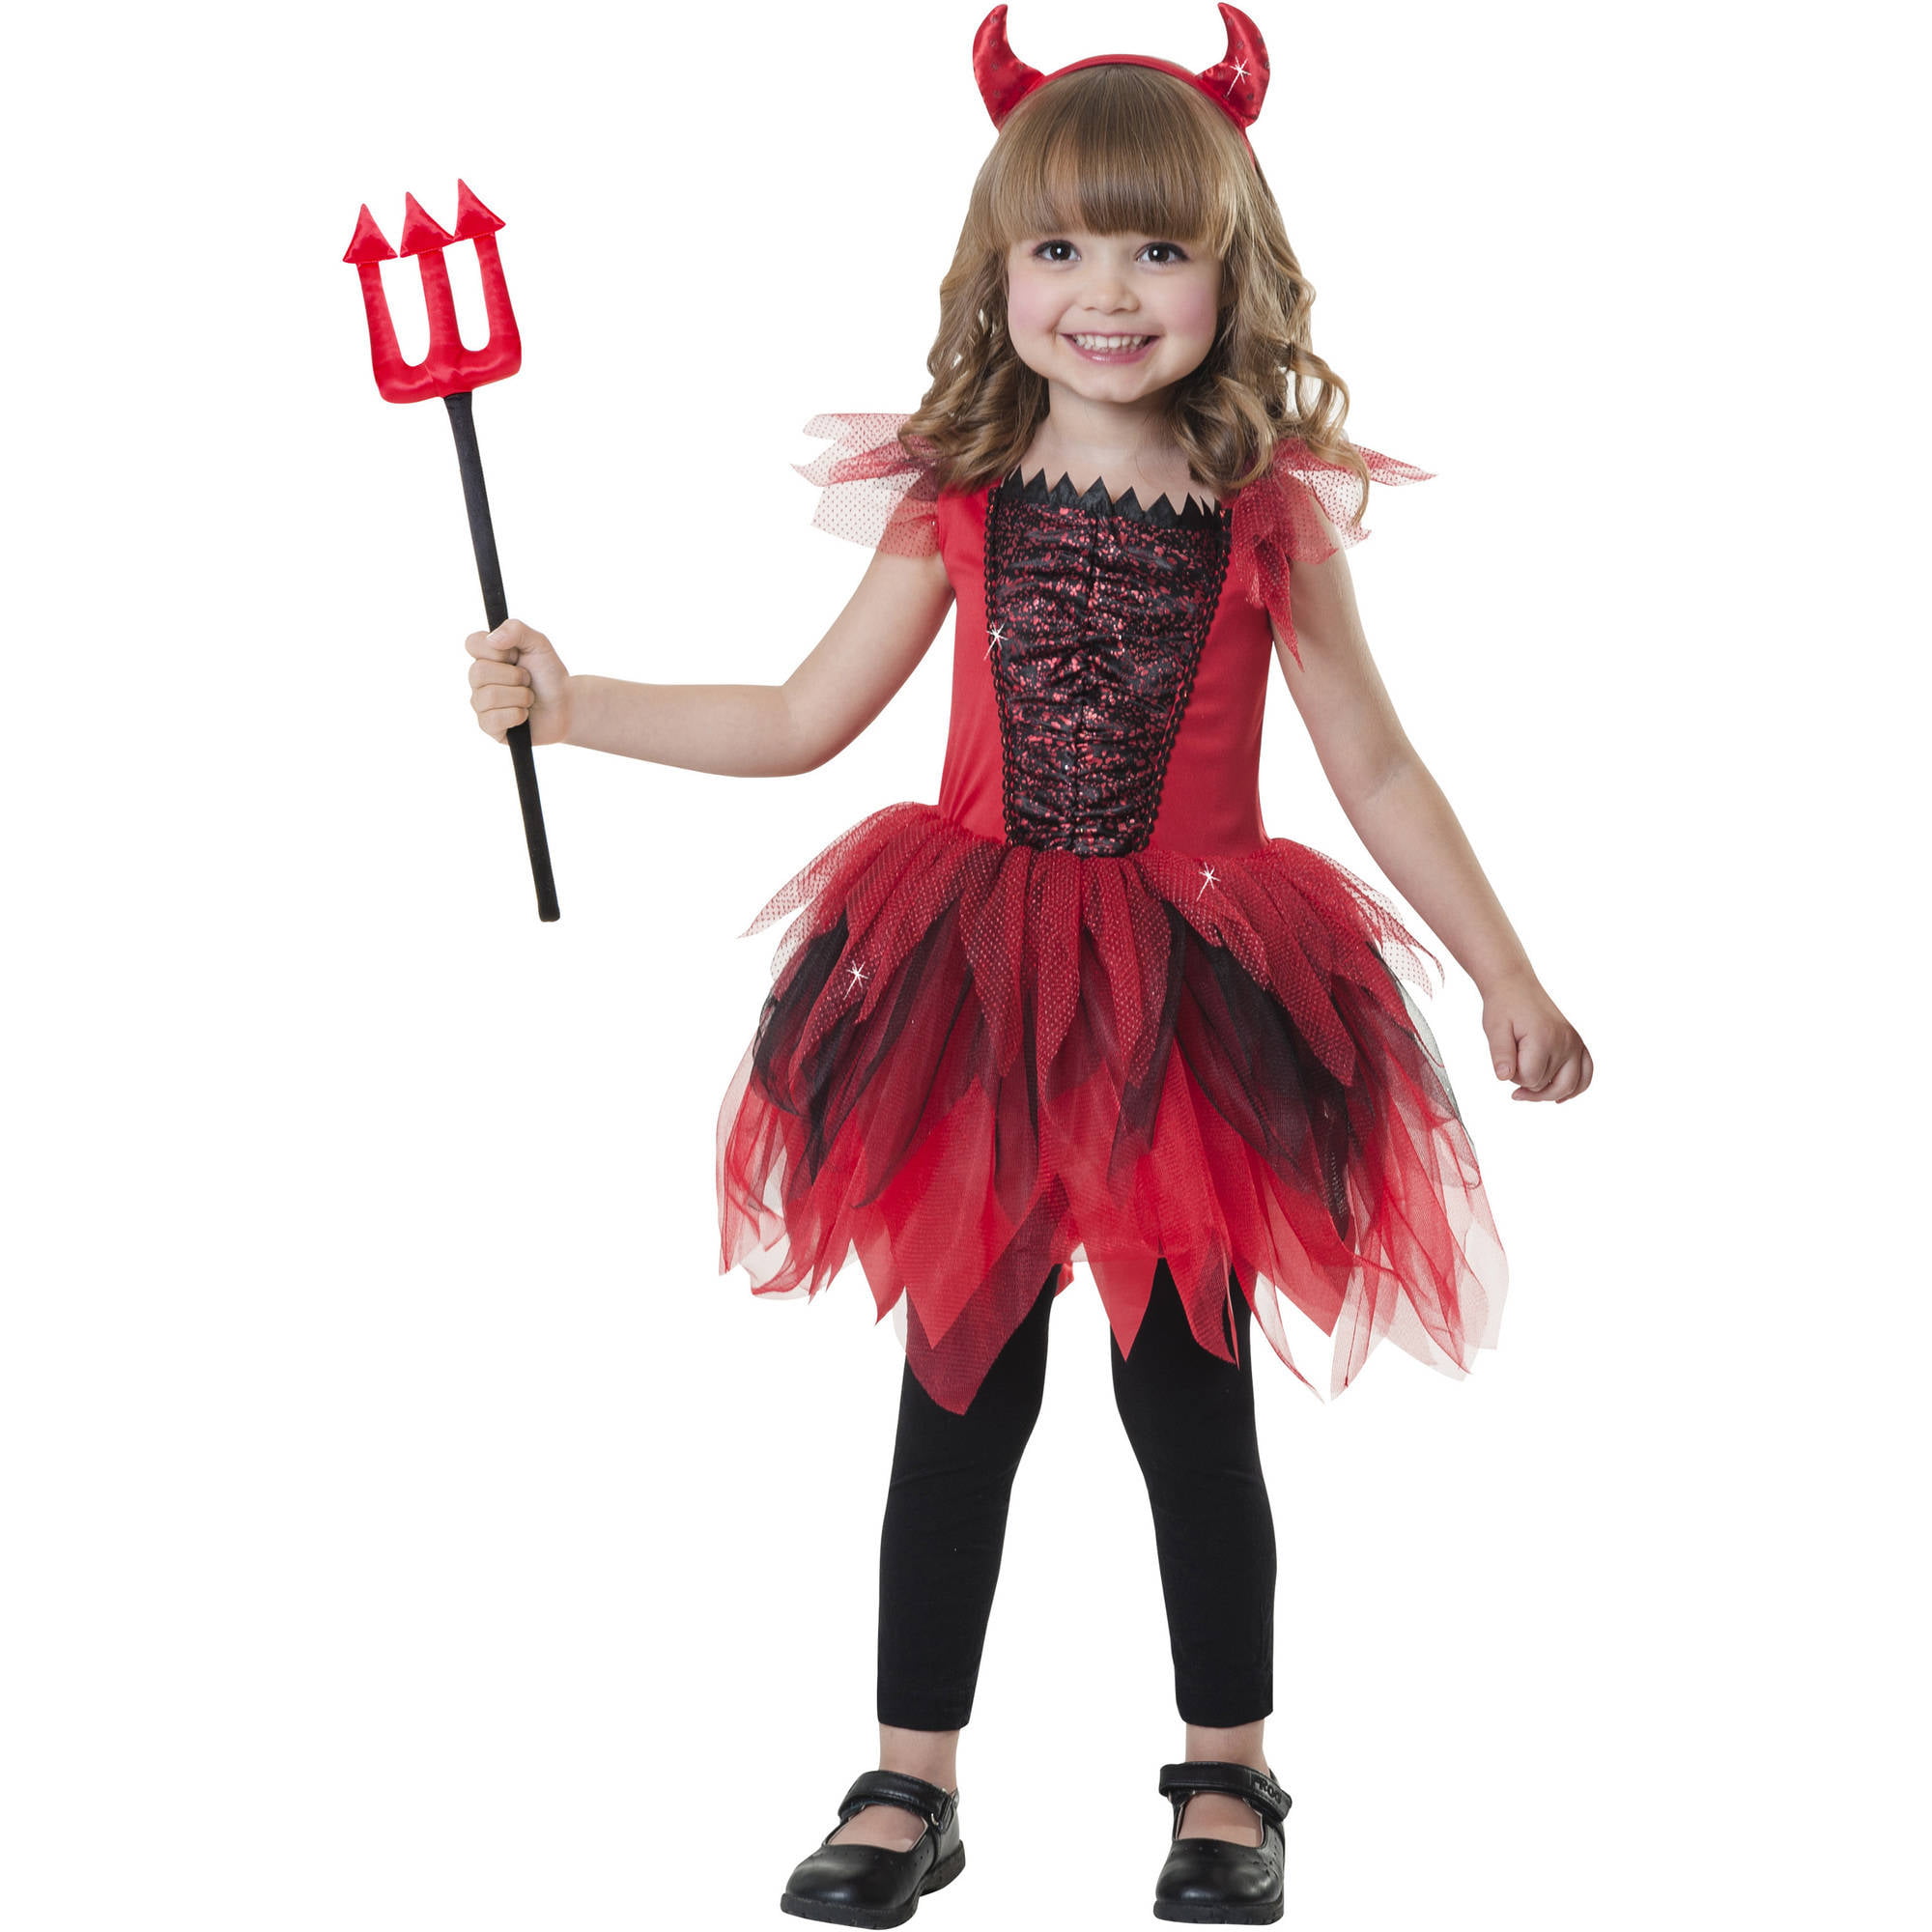  Little  Devil Toddler Halloween  Costume  Walmart com 